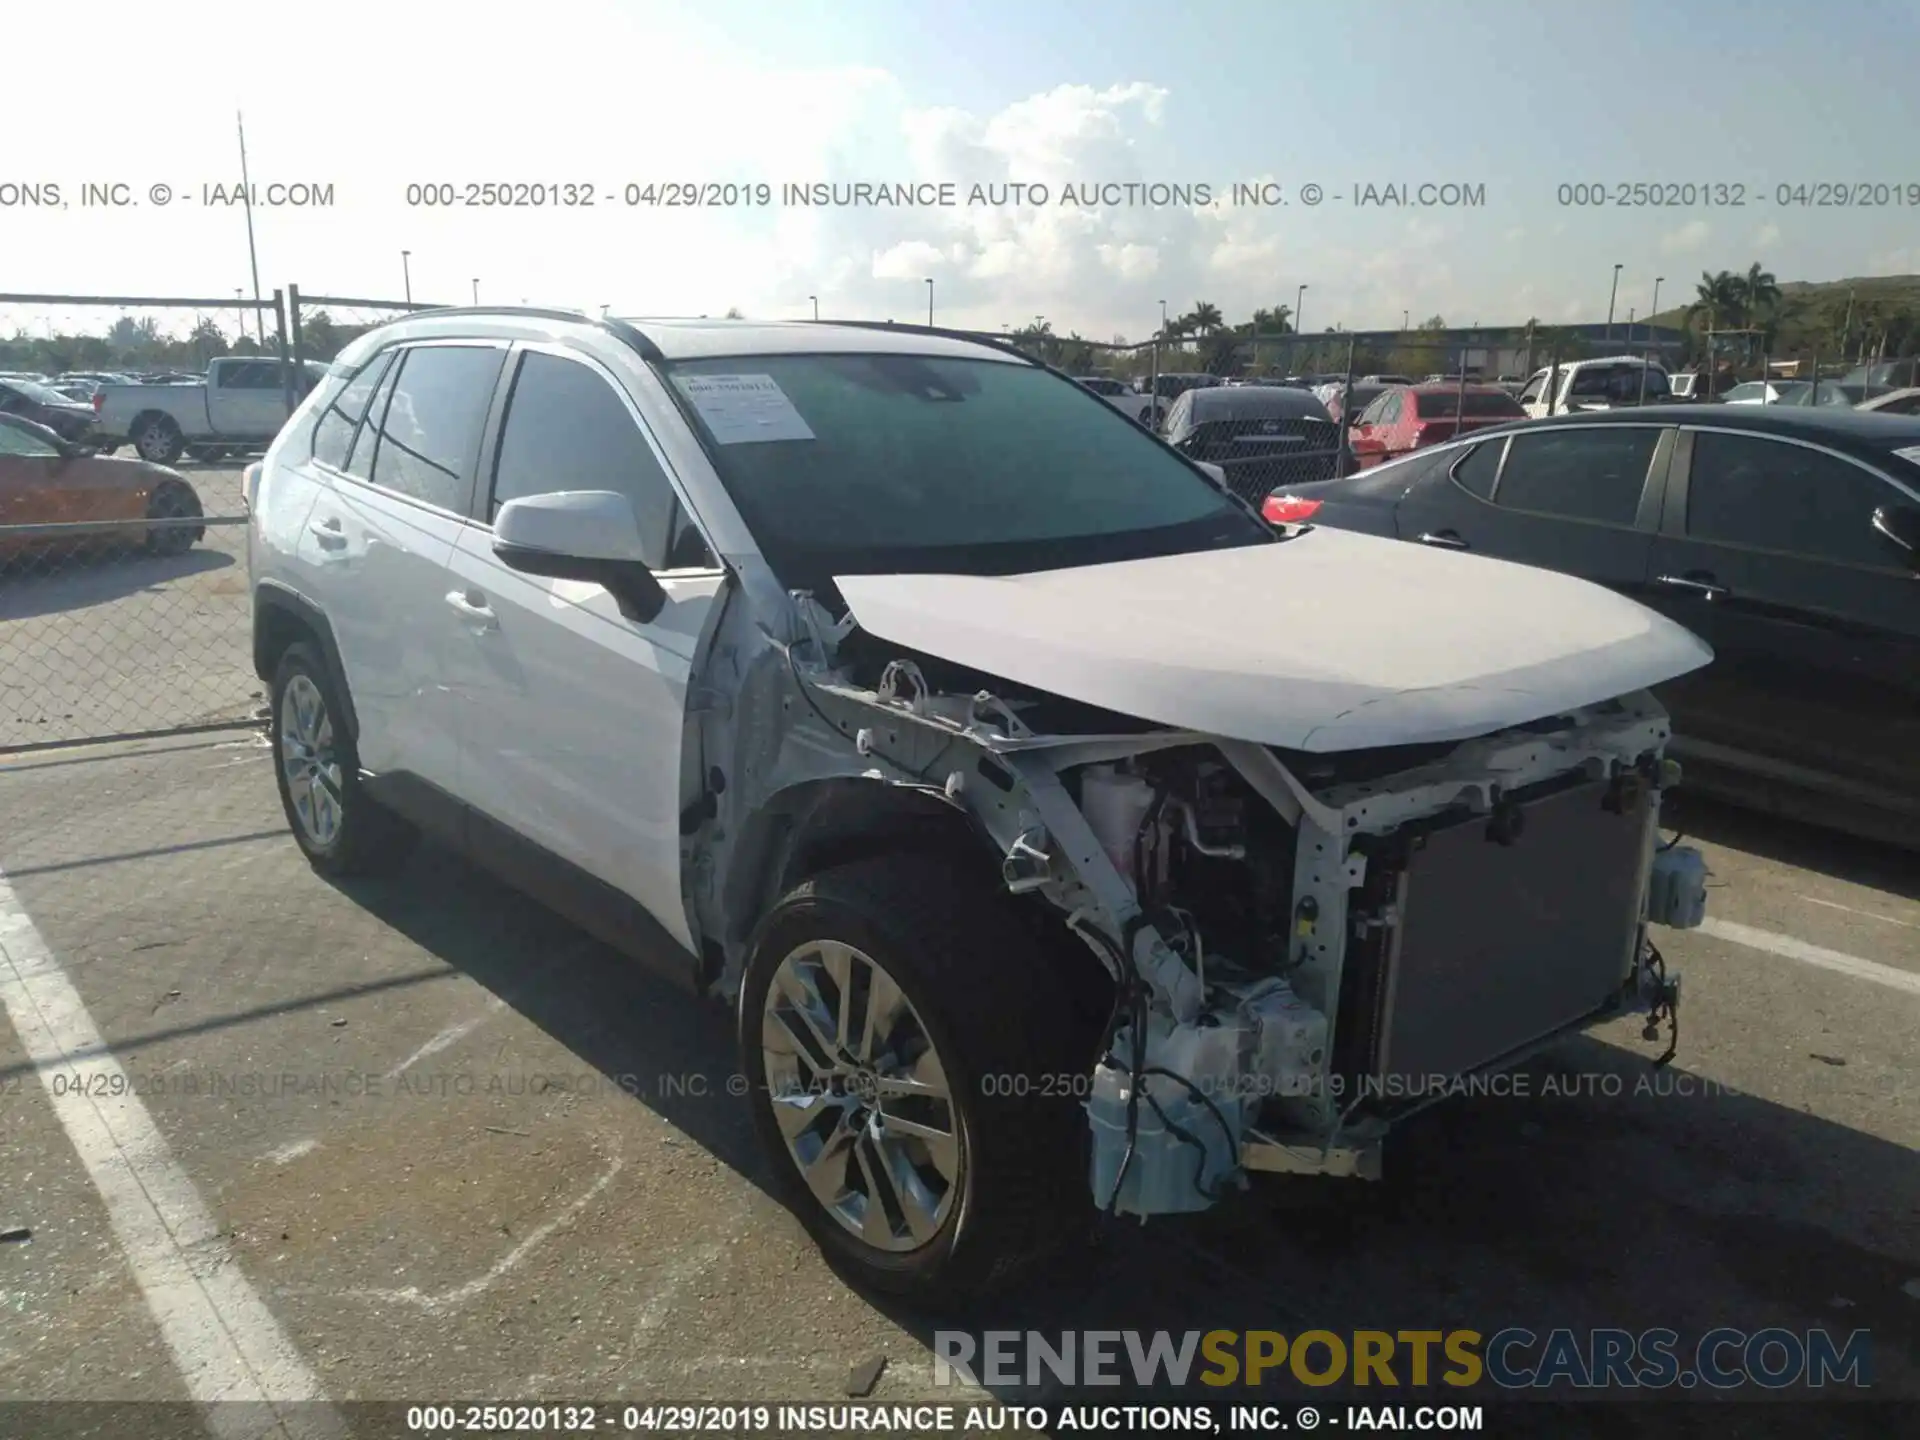 1 Photograph of a damaged car JTMC1RFV7KD017746 TOYOTA RAV4 2019